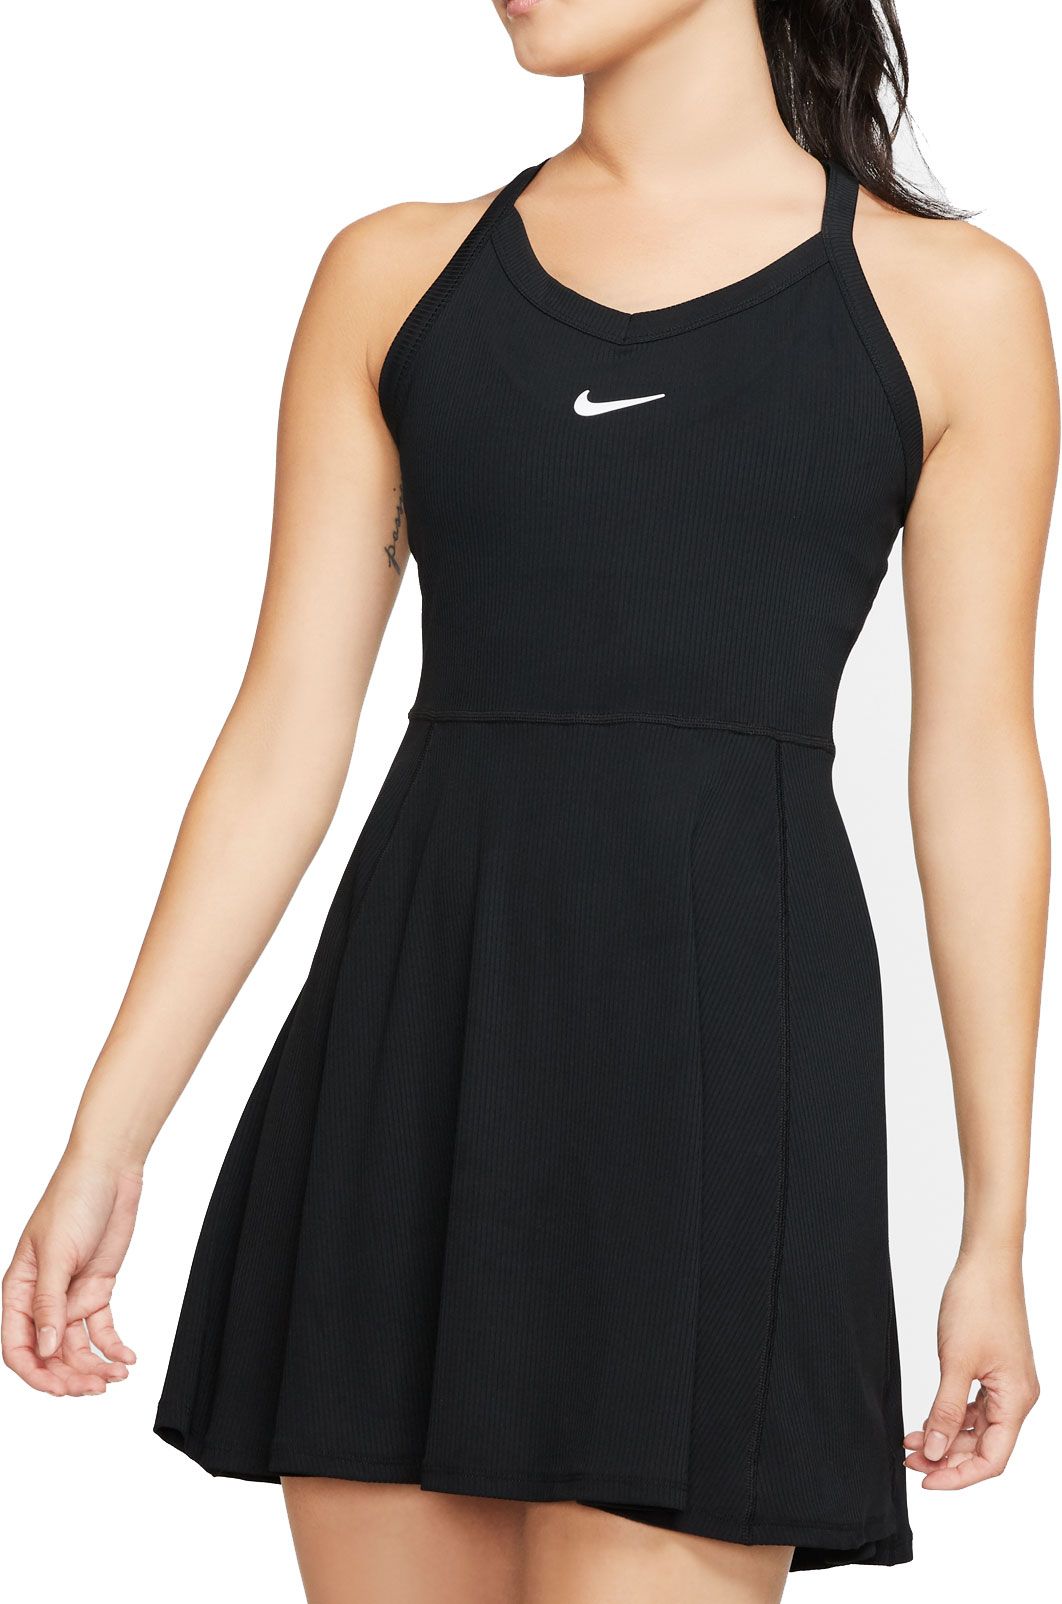 black tennis dress